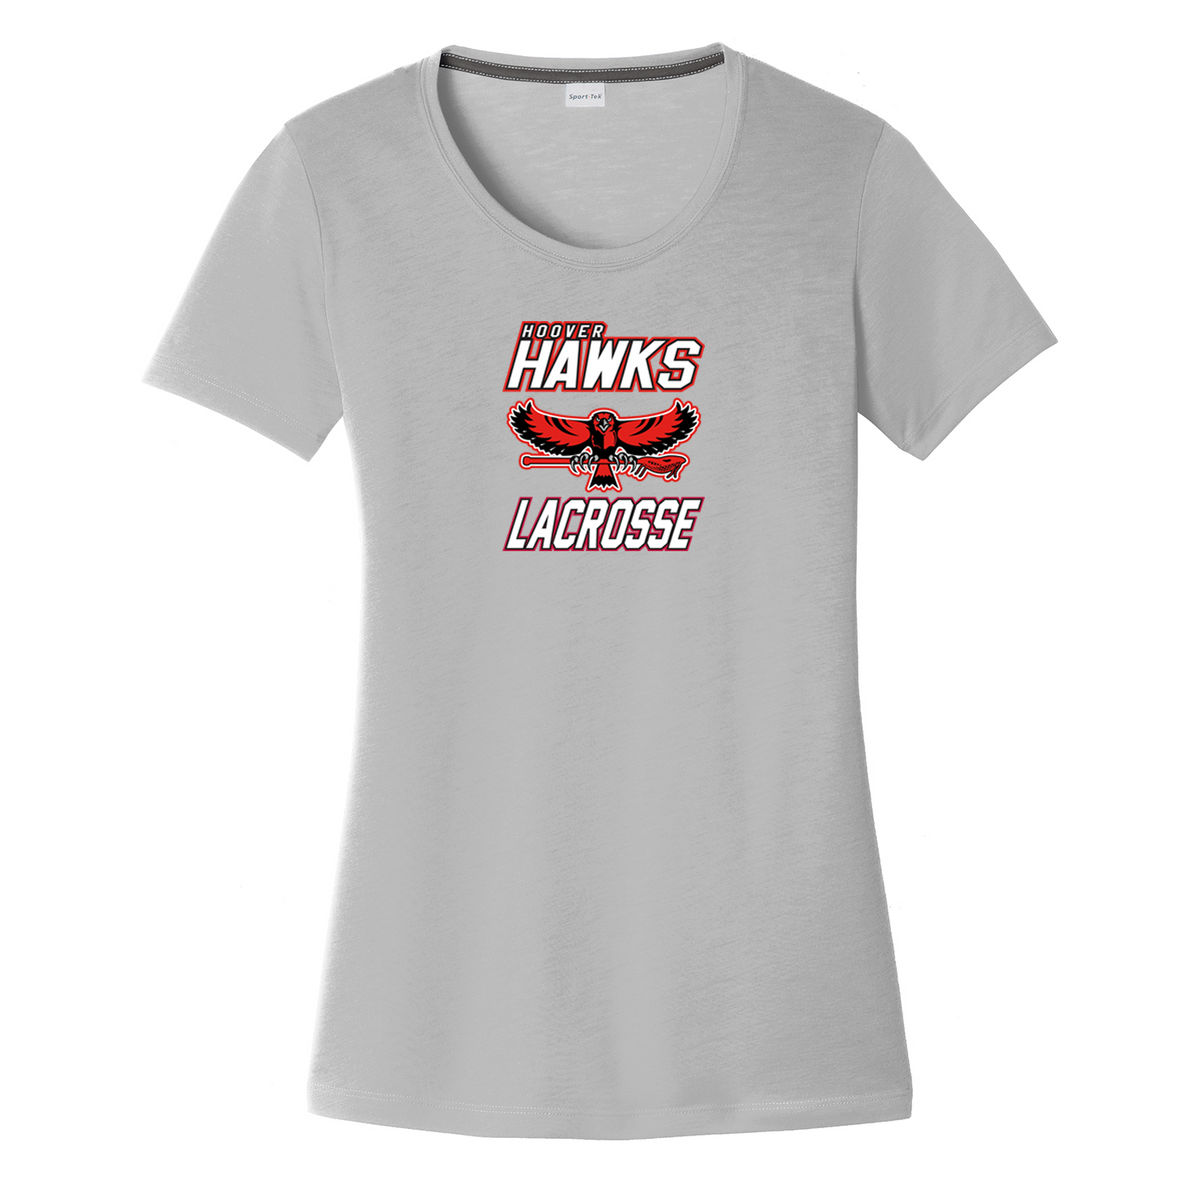 Hawks Lacrosse Women's CottonTouch Performance T-Shirt